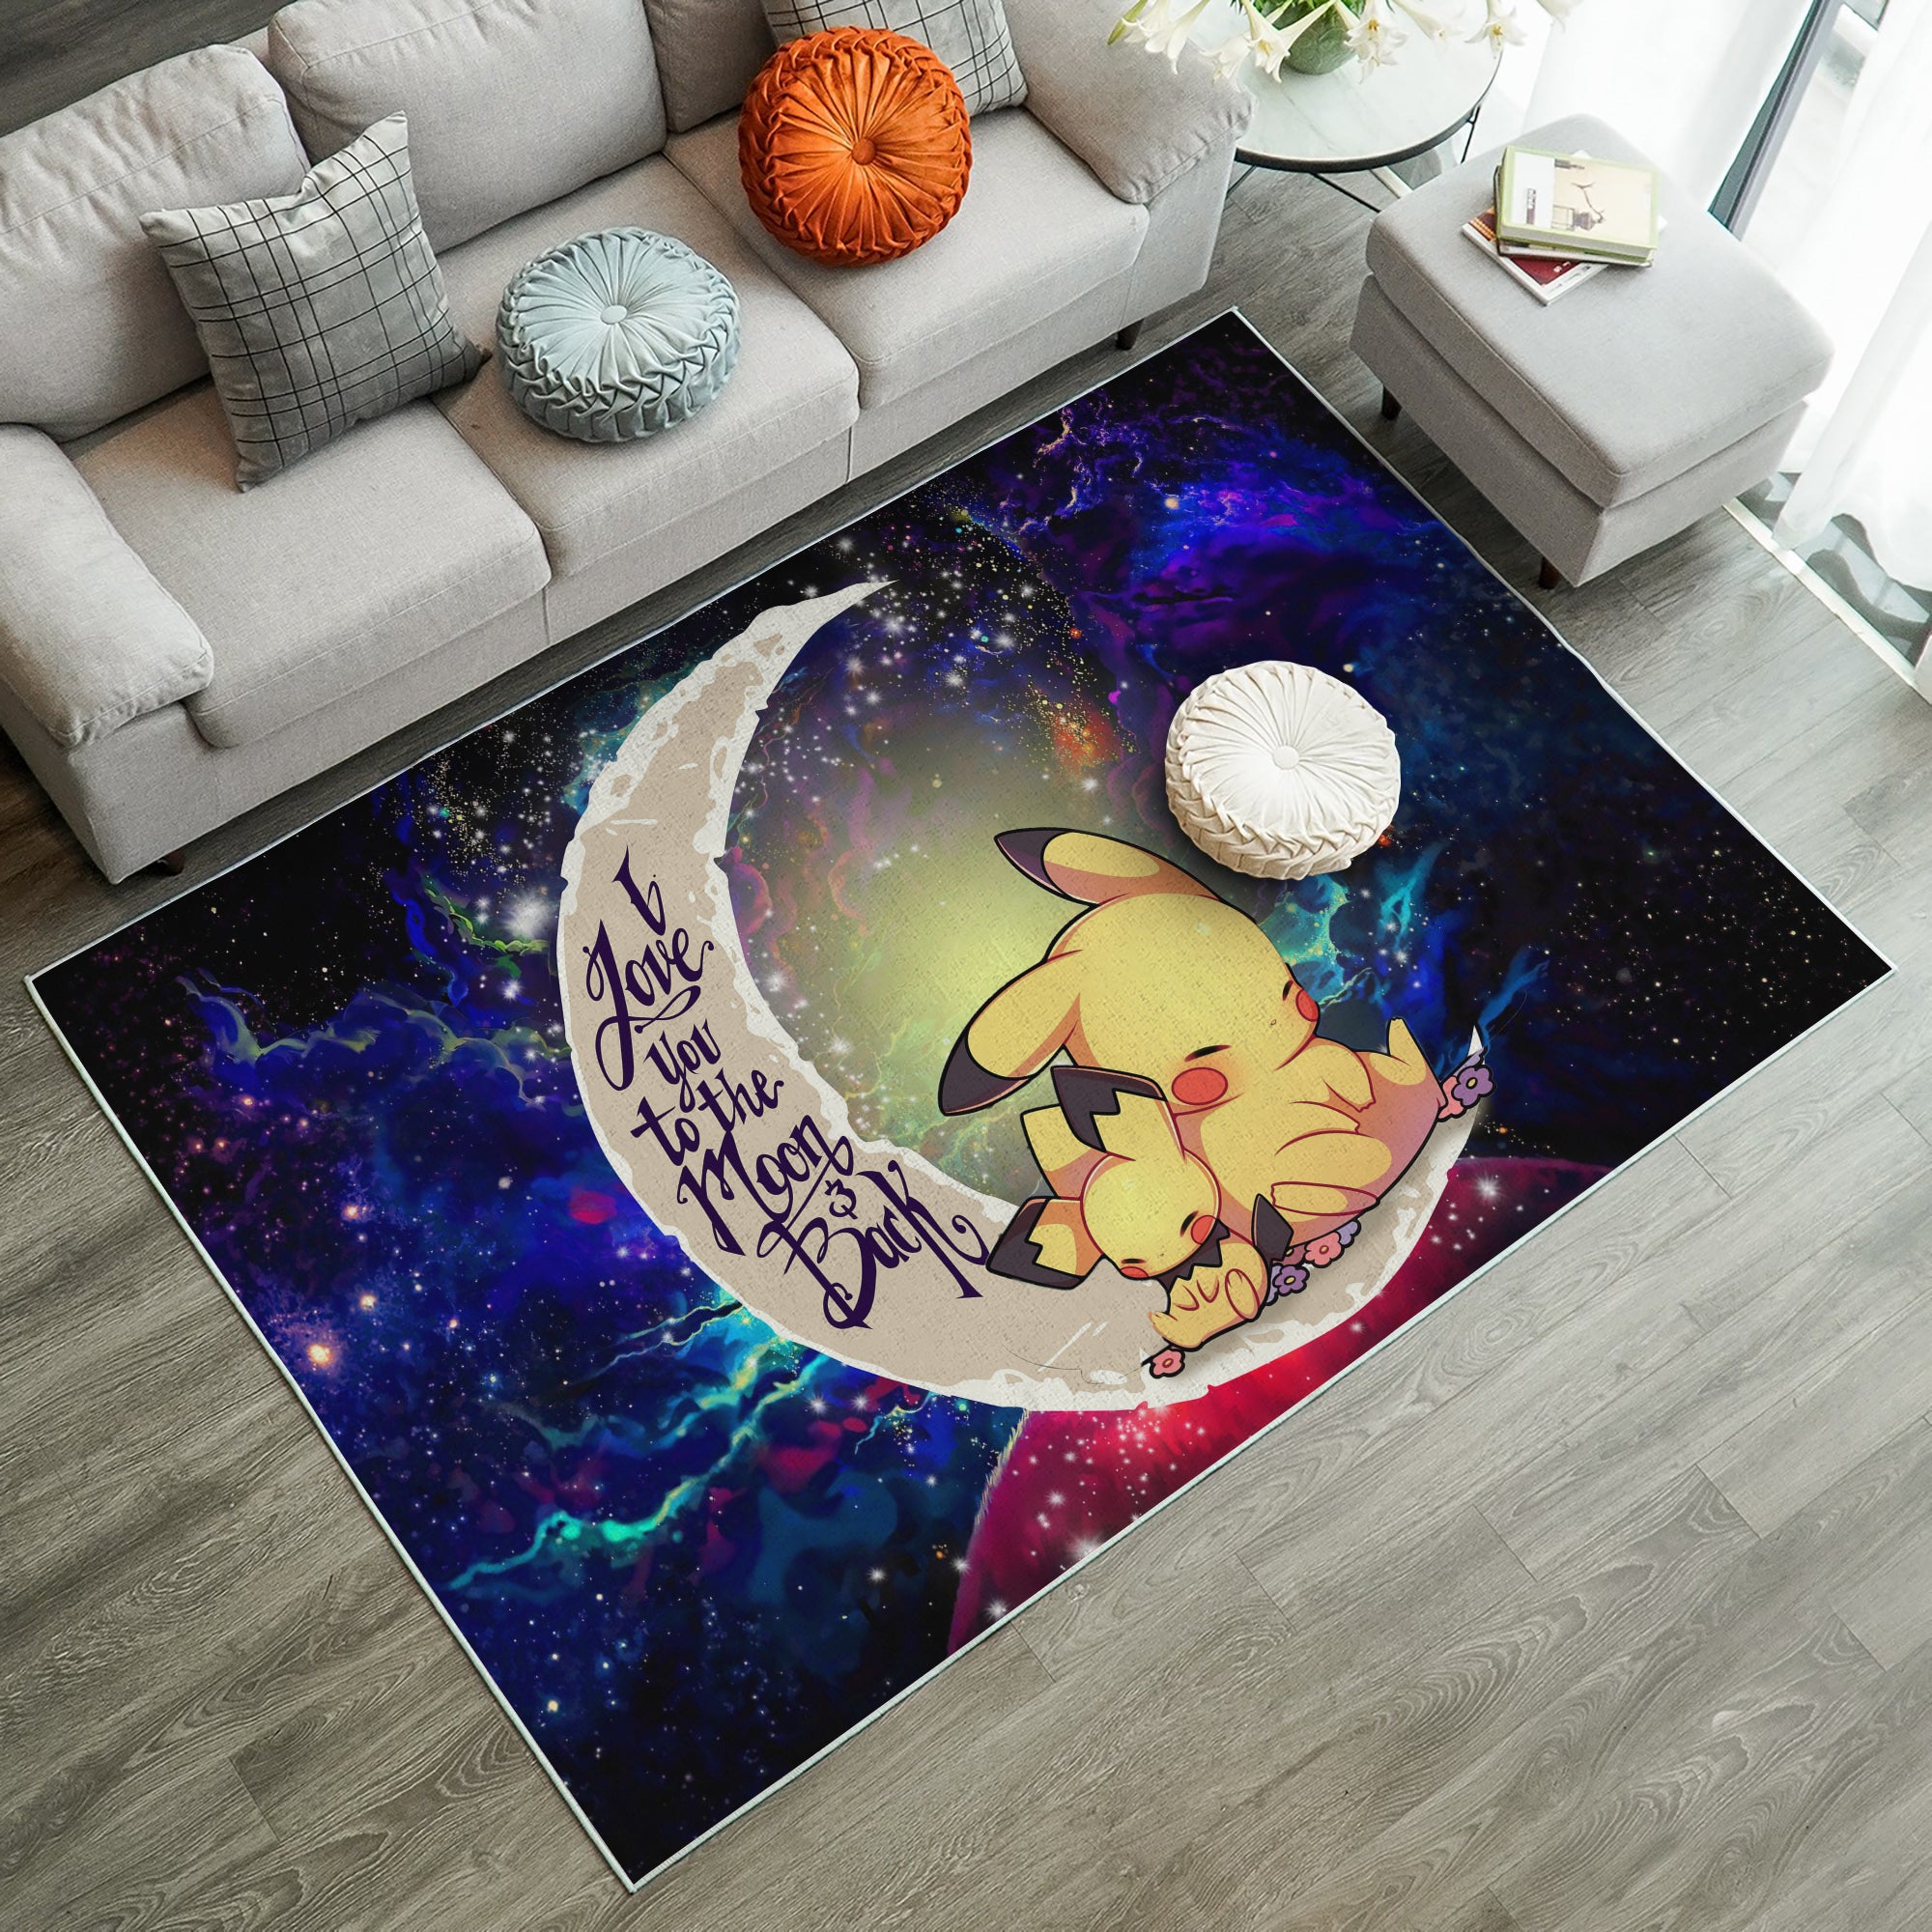 Pikachu Pokemon Sleep Love You To The Moon Galaxy Carpet Rug Home Room Decor